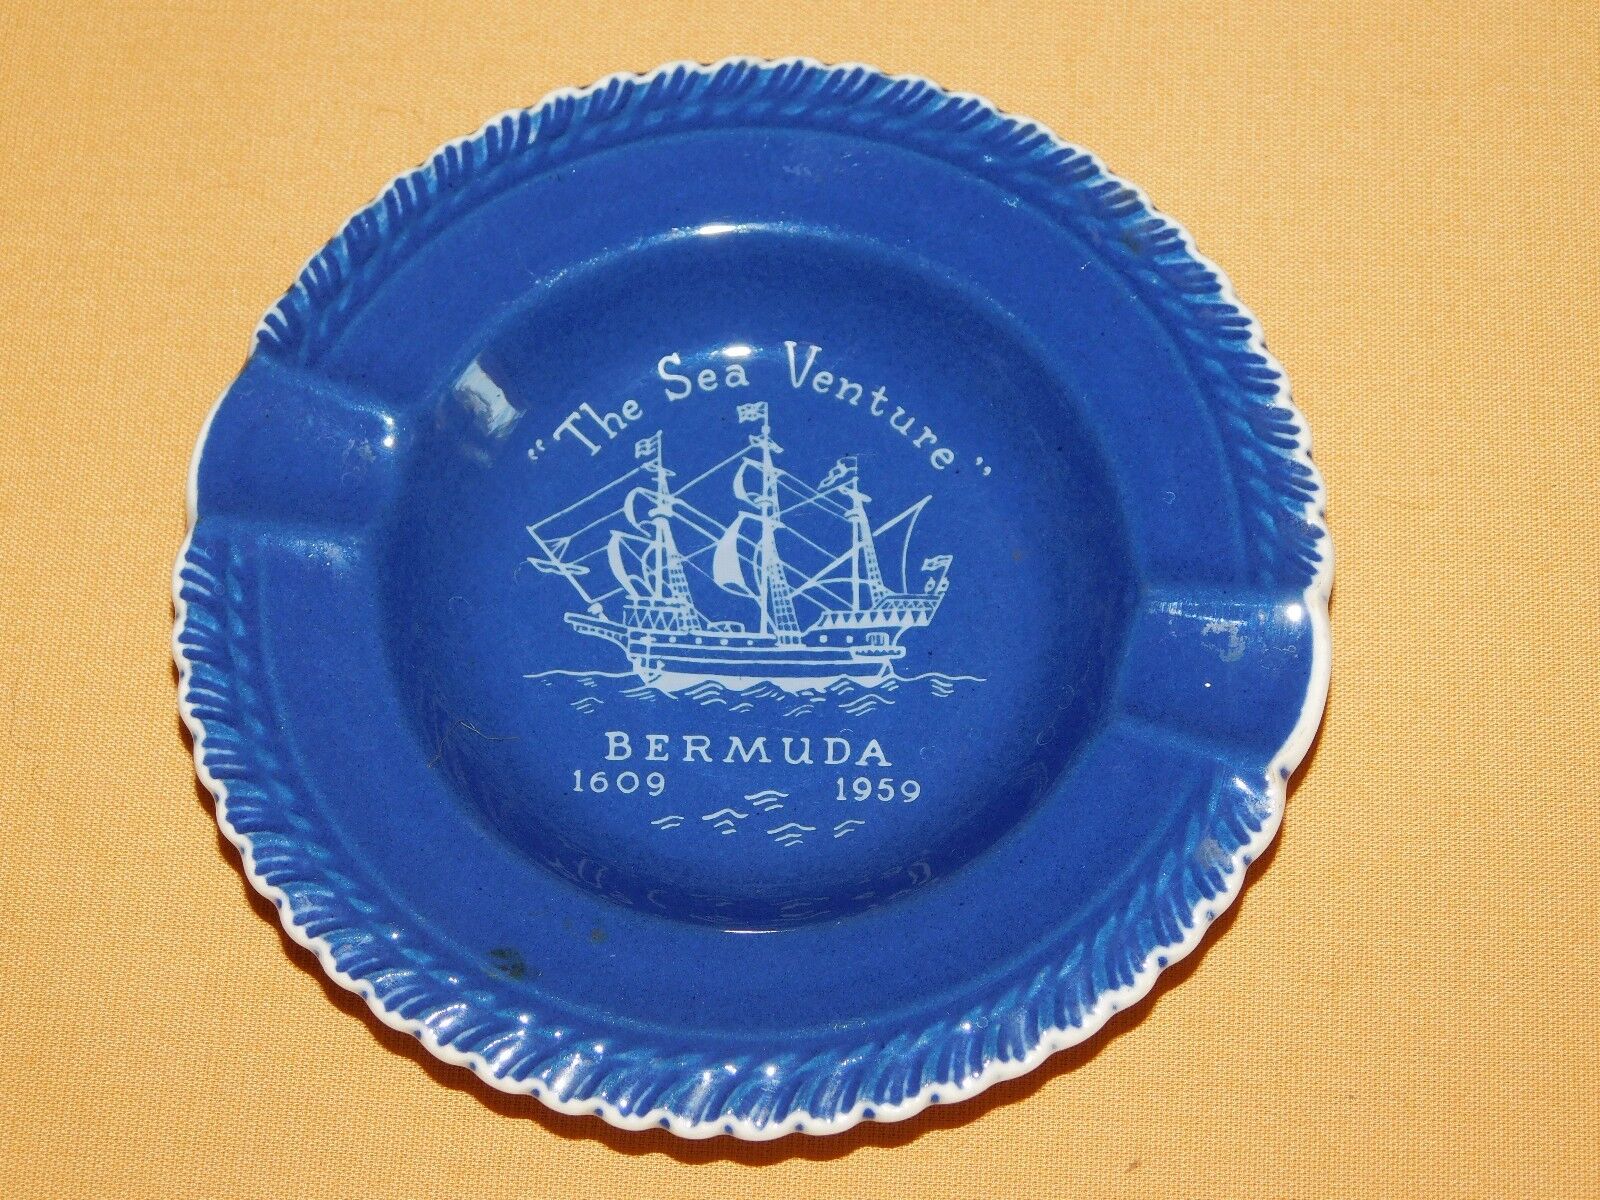 VINTAGE SAILING SHIP 1609-1959 THE SEA VENTURE BERMUDA ASHTRAY